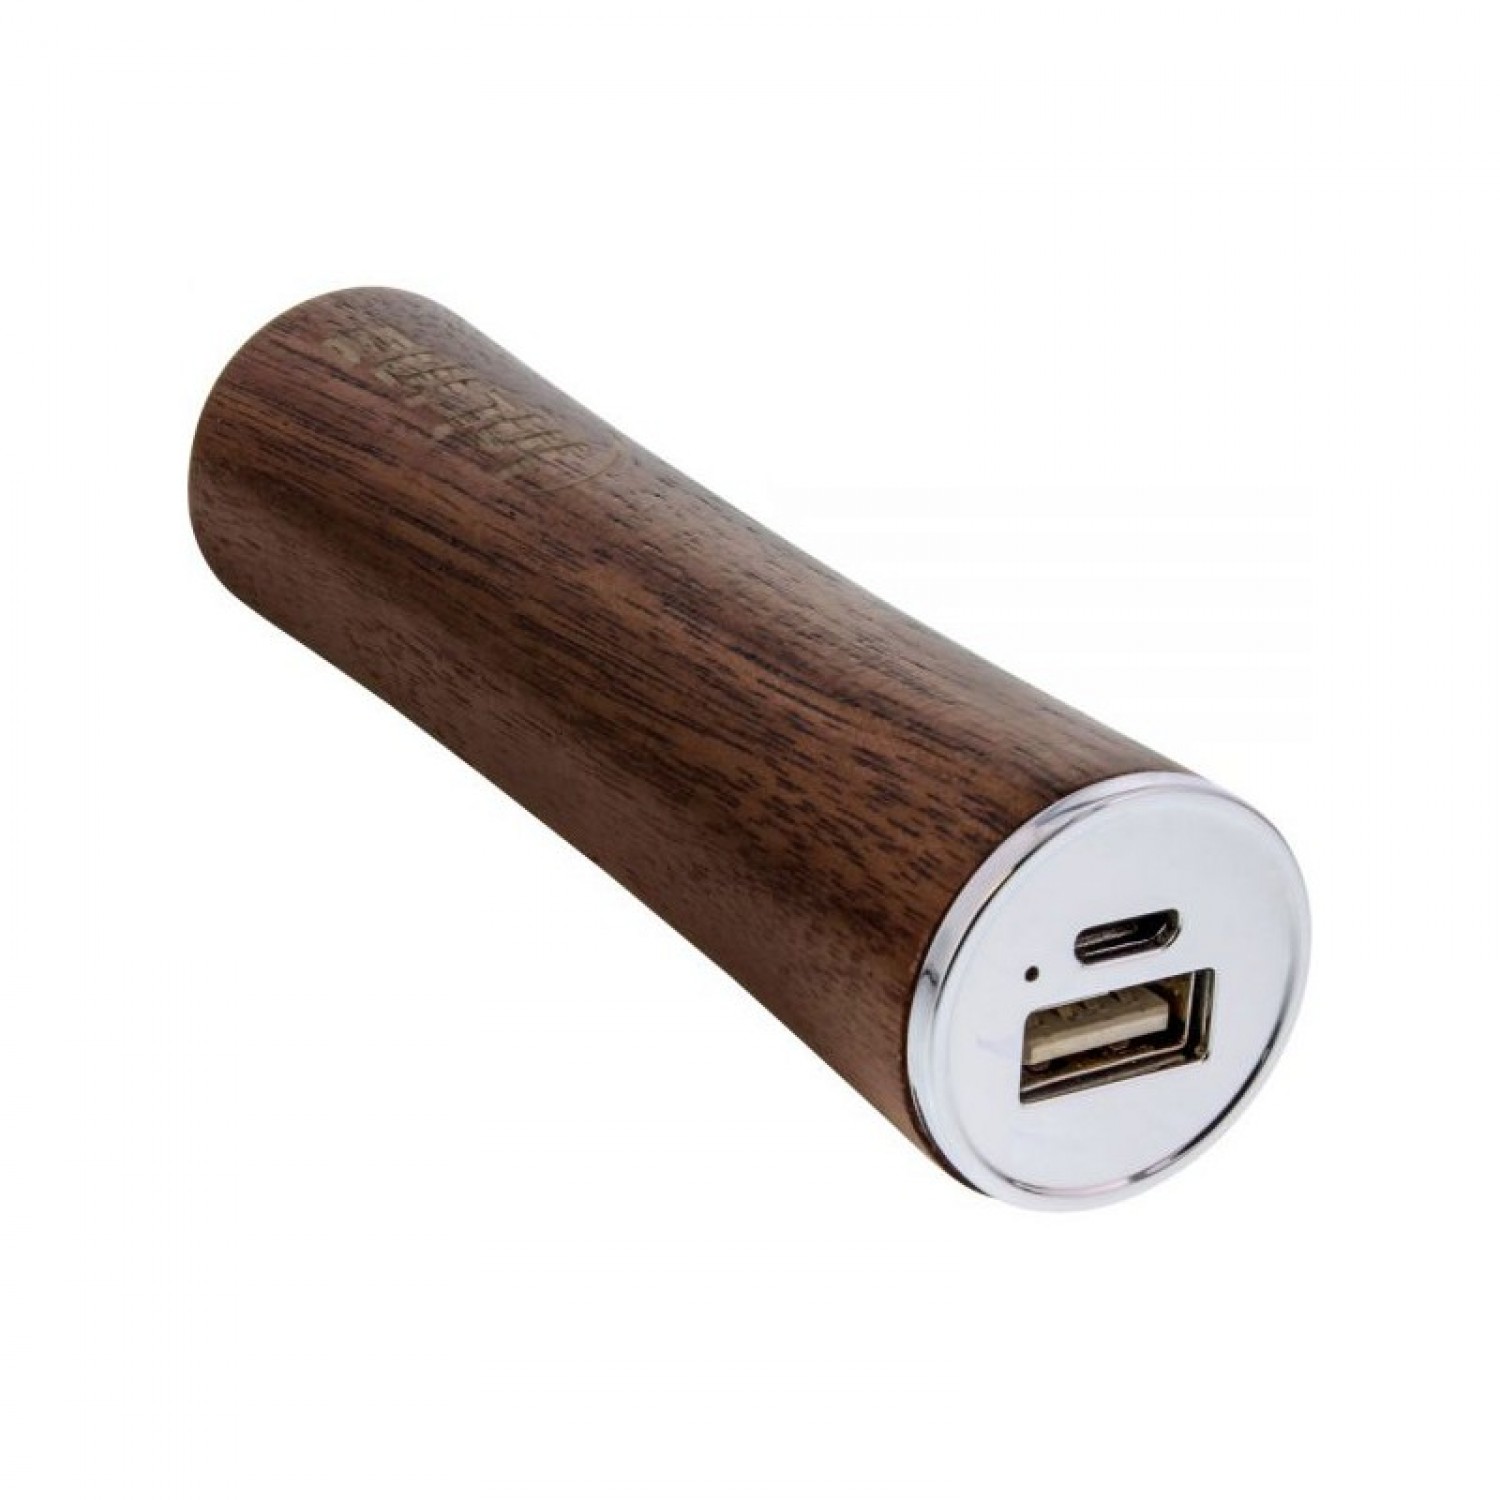 InLine® woodpower USB Powerbank from 